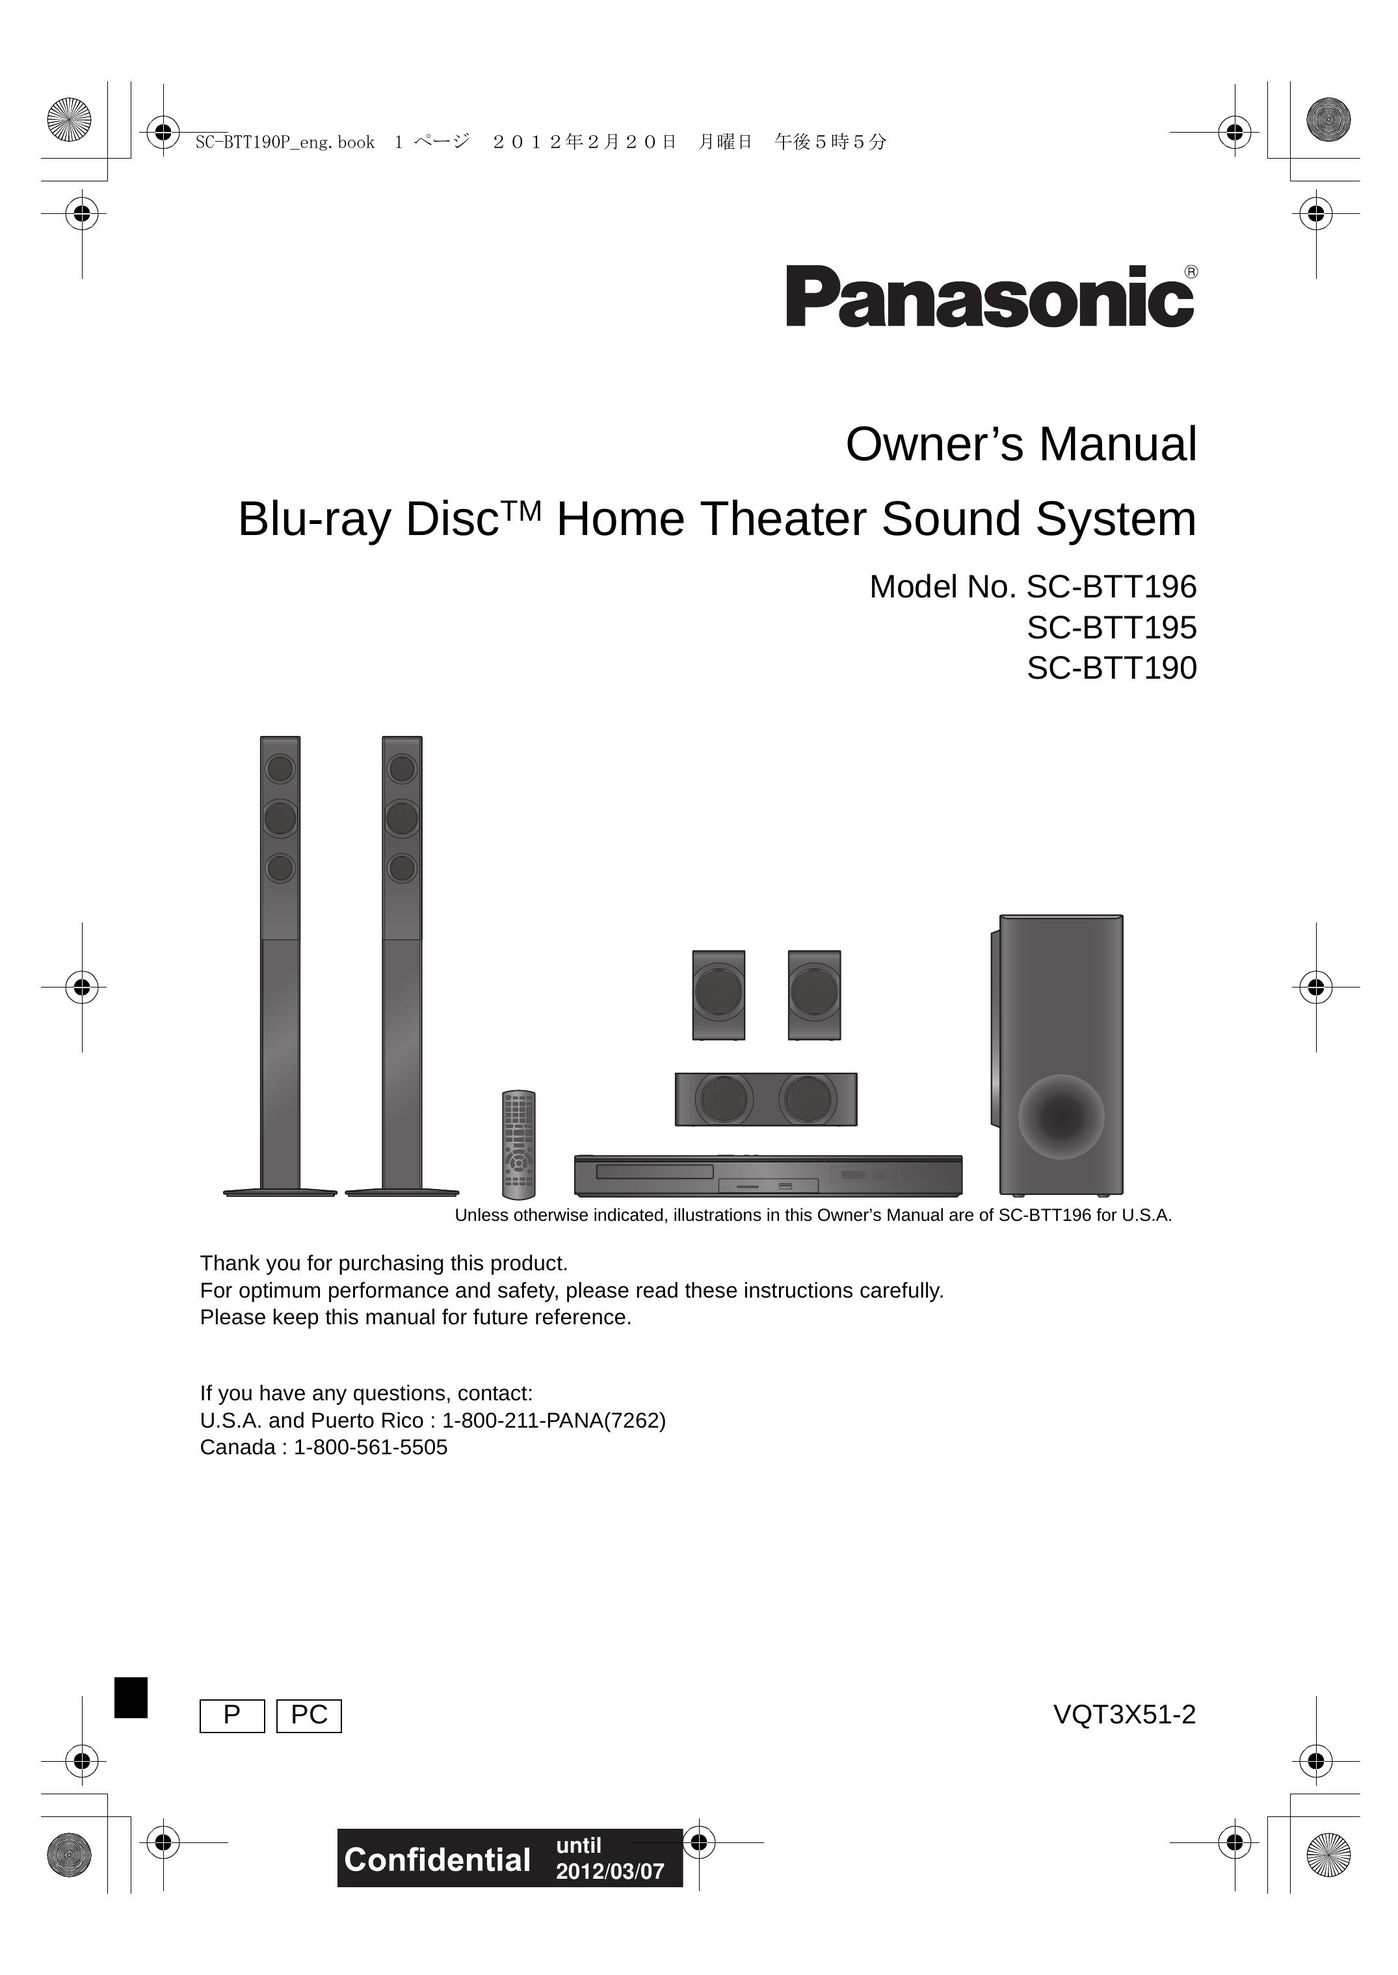 Panasonic SC-BTT 190 Speaker System User Manual